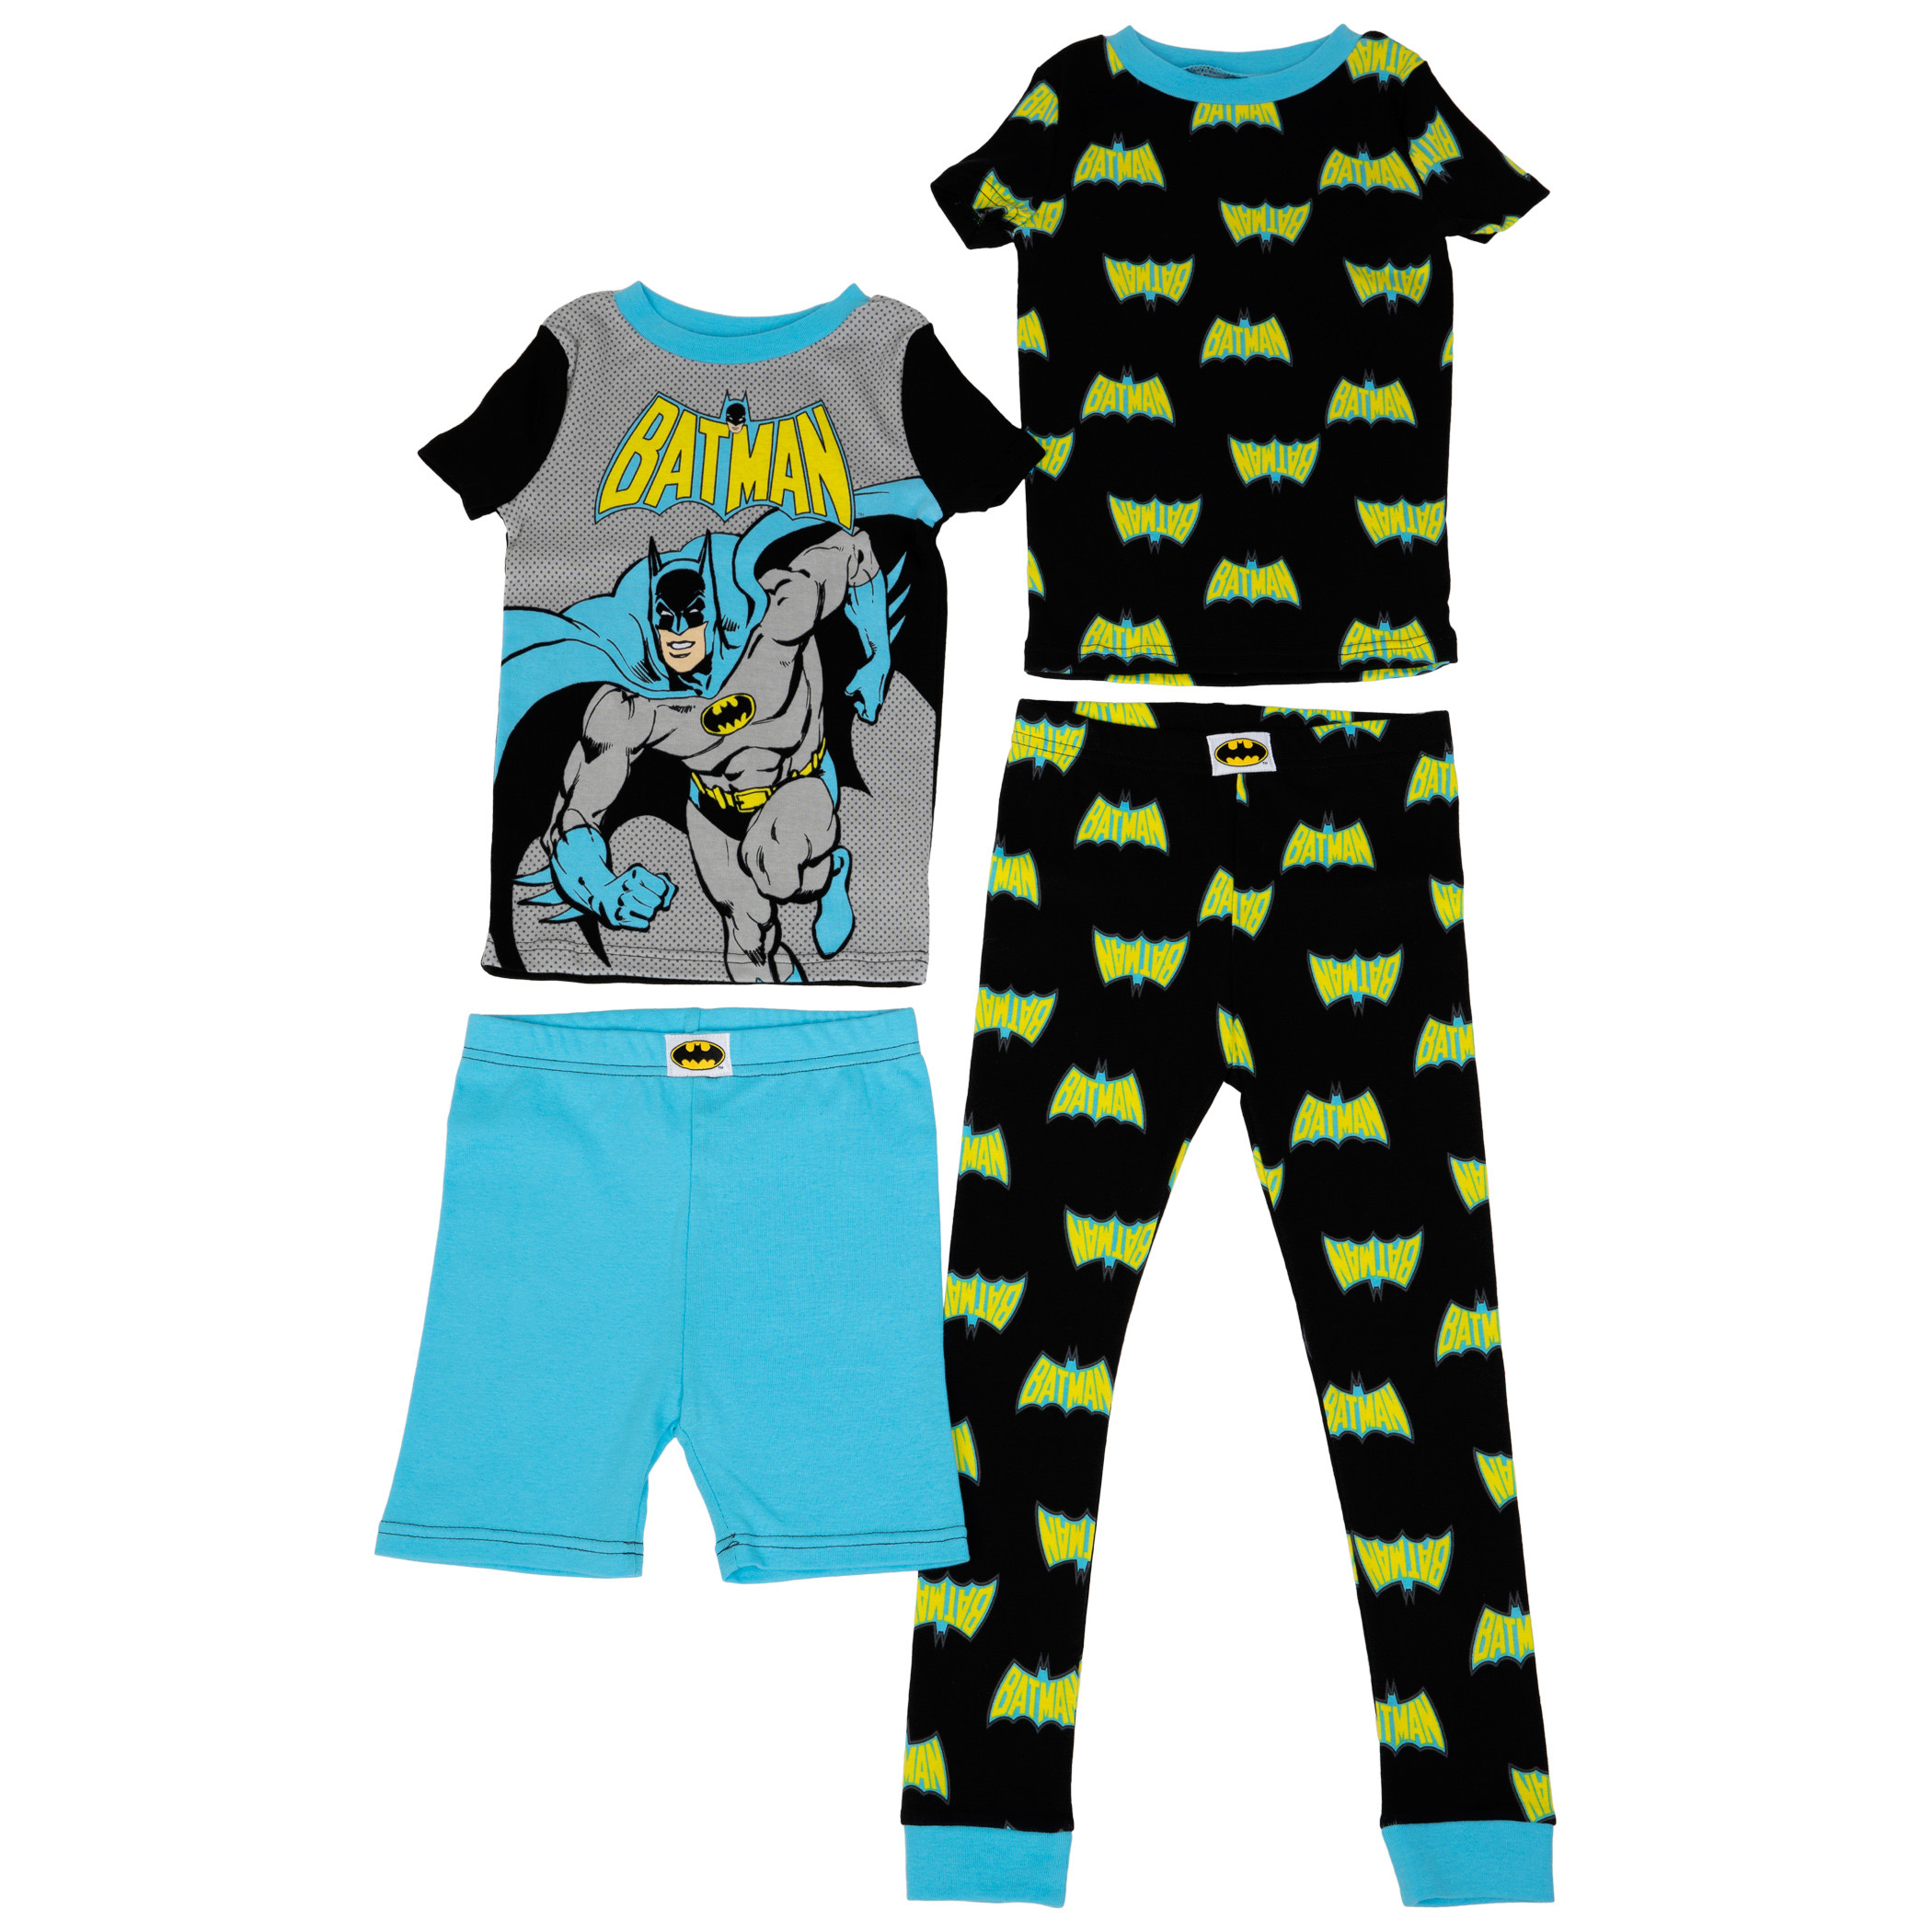 Batman Figure and All Over Symbols Youth 4-Piece Pajama Set